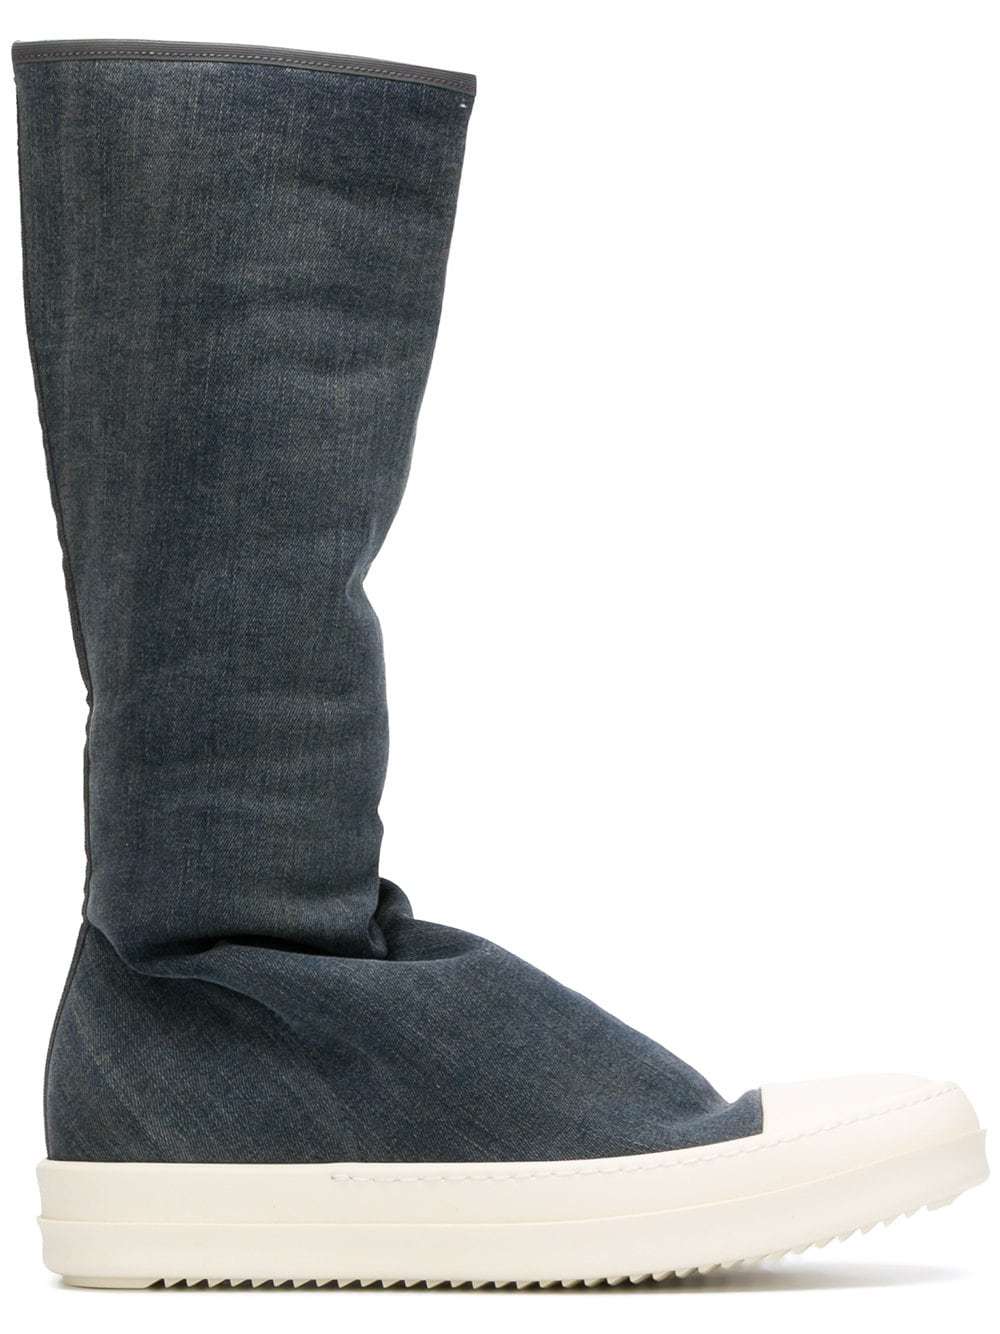 tall sneaker boots